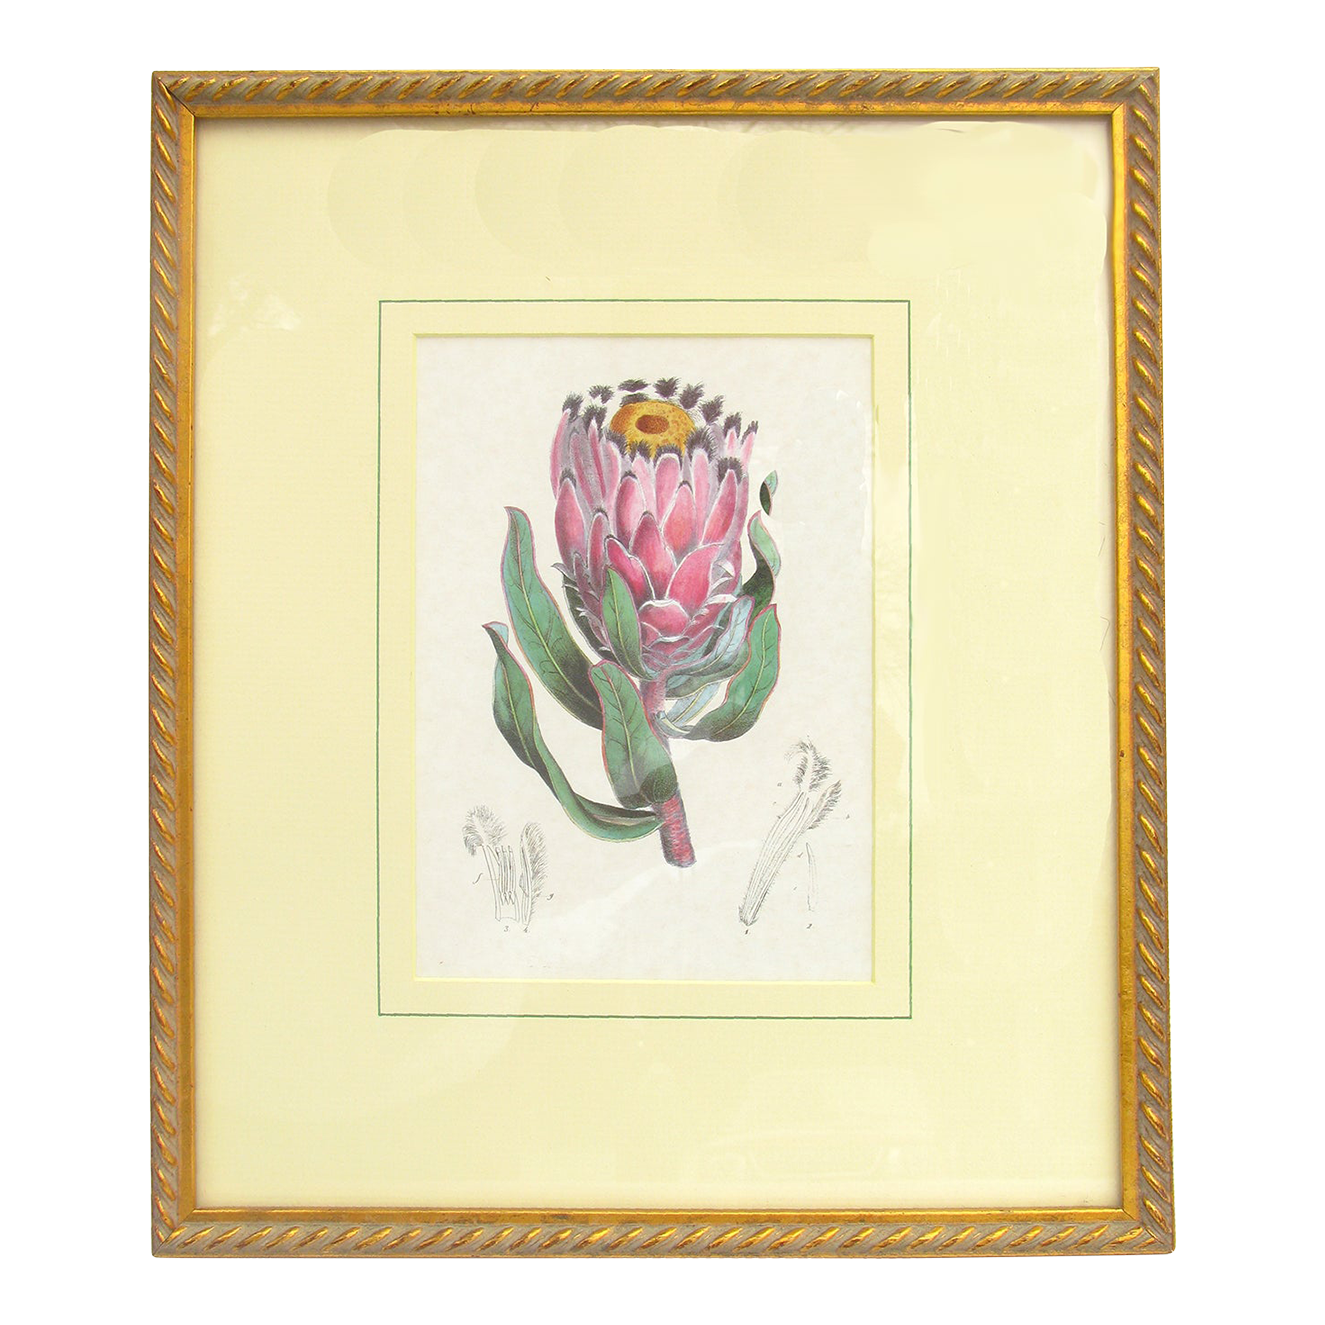 Vintage Botanical Engraving - Protea Flower, National Flower of South Africa